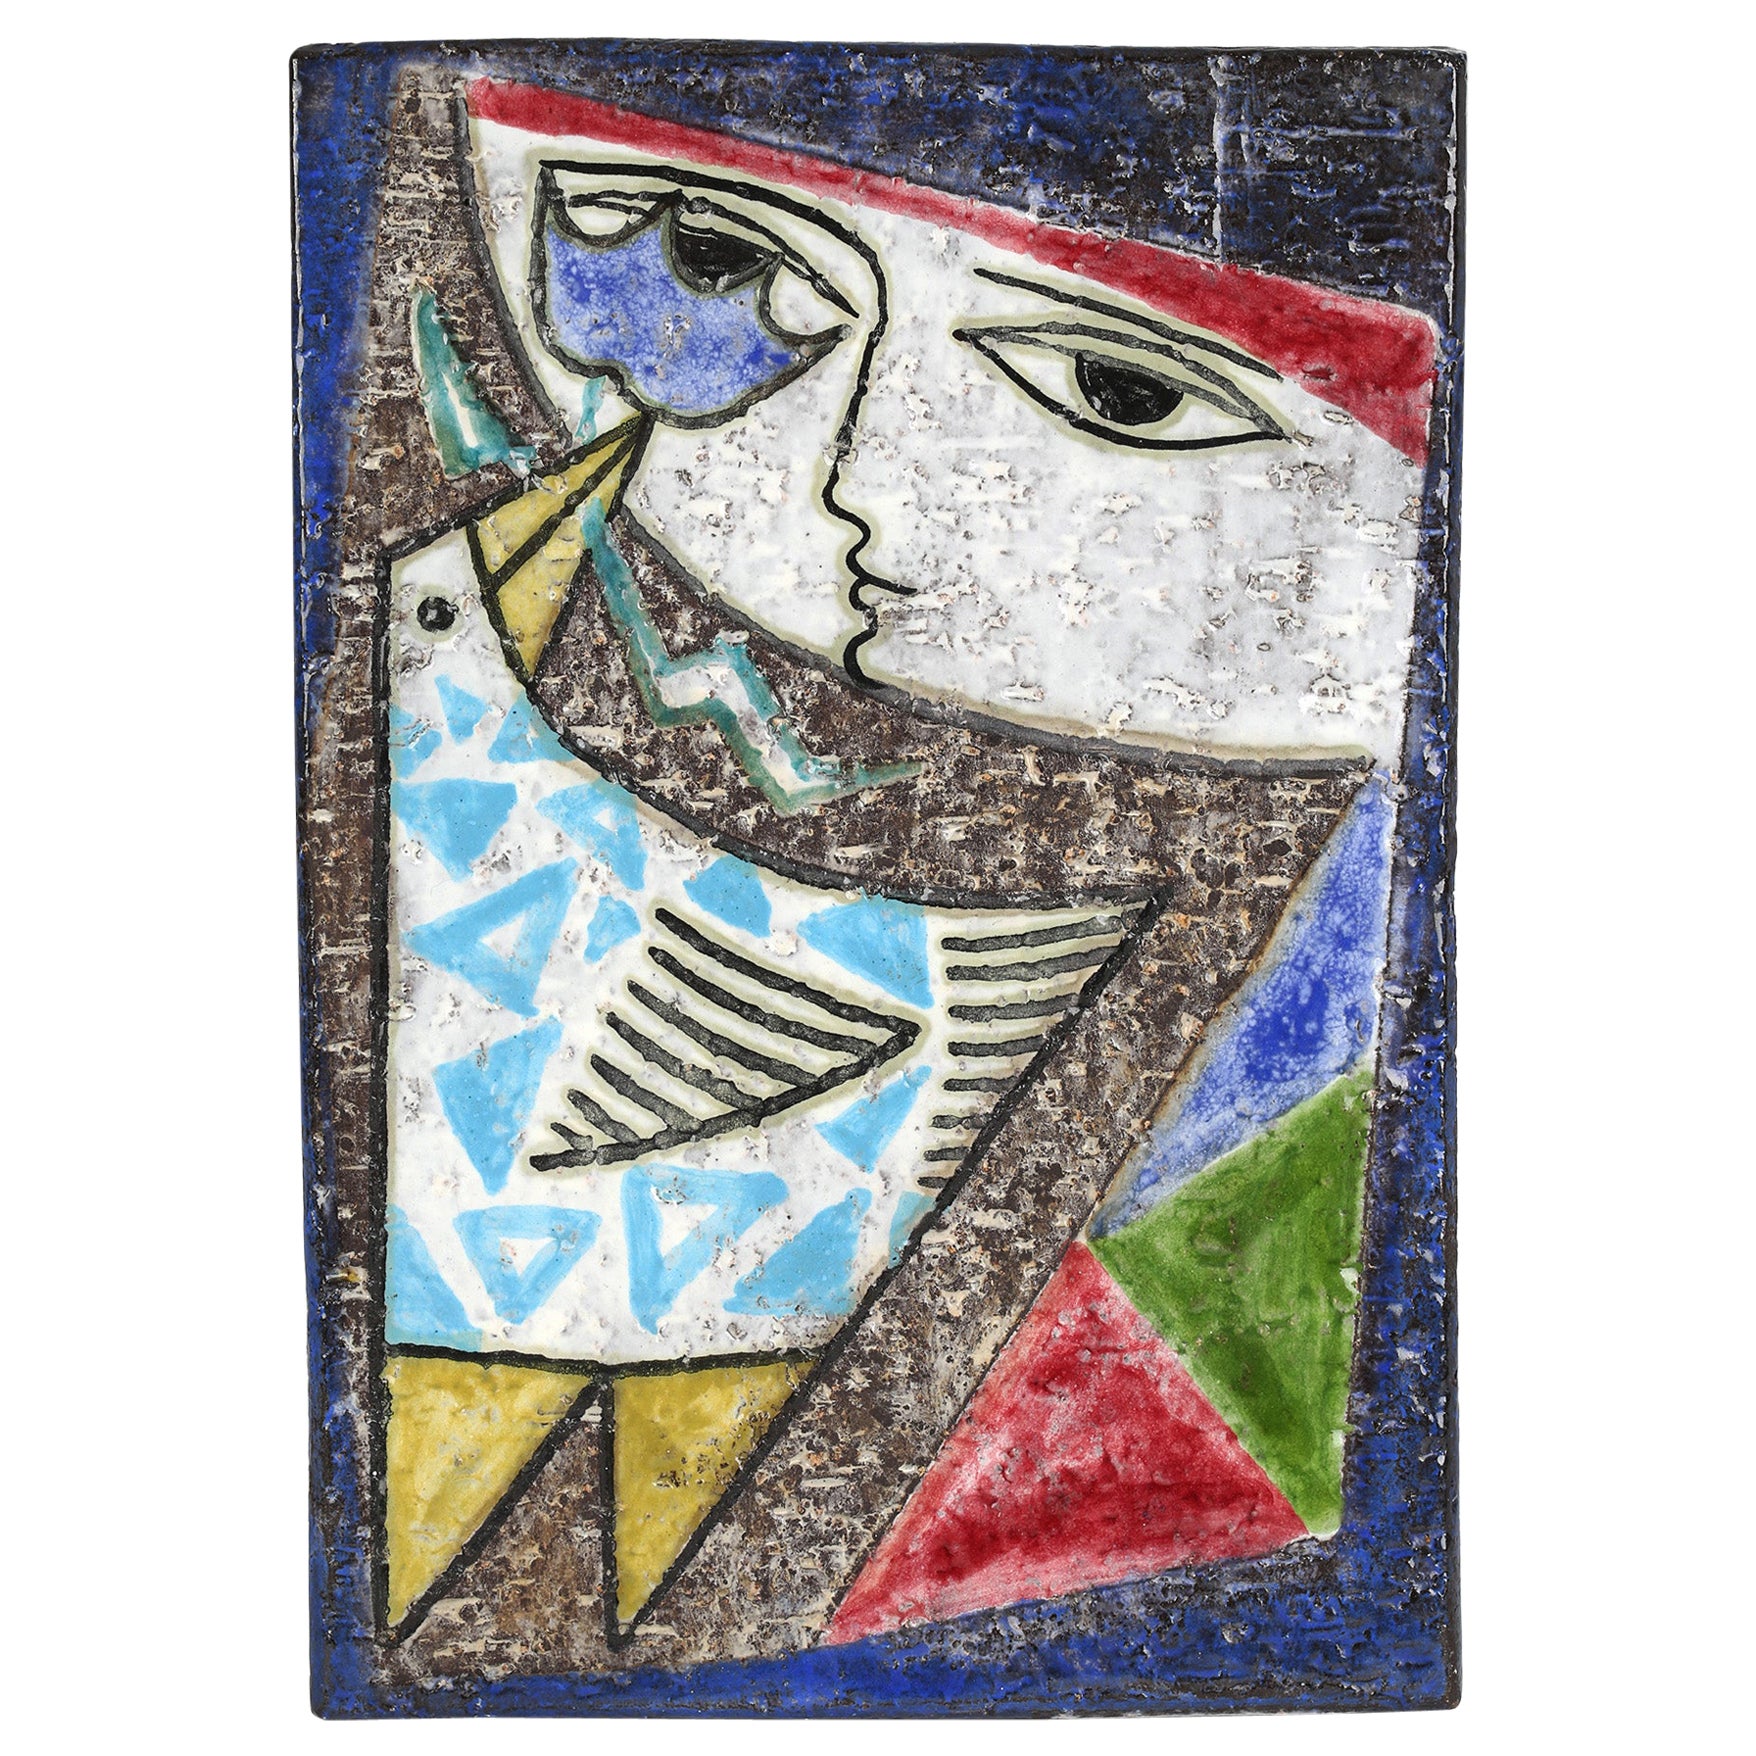 Mari Simmulson Upsala-Ekeby Abstract Painted Girl and Bird Pottery Tile For Sale